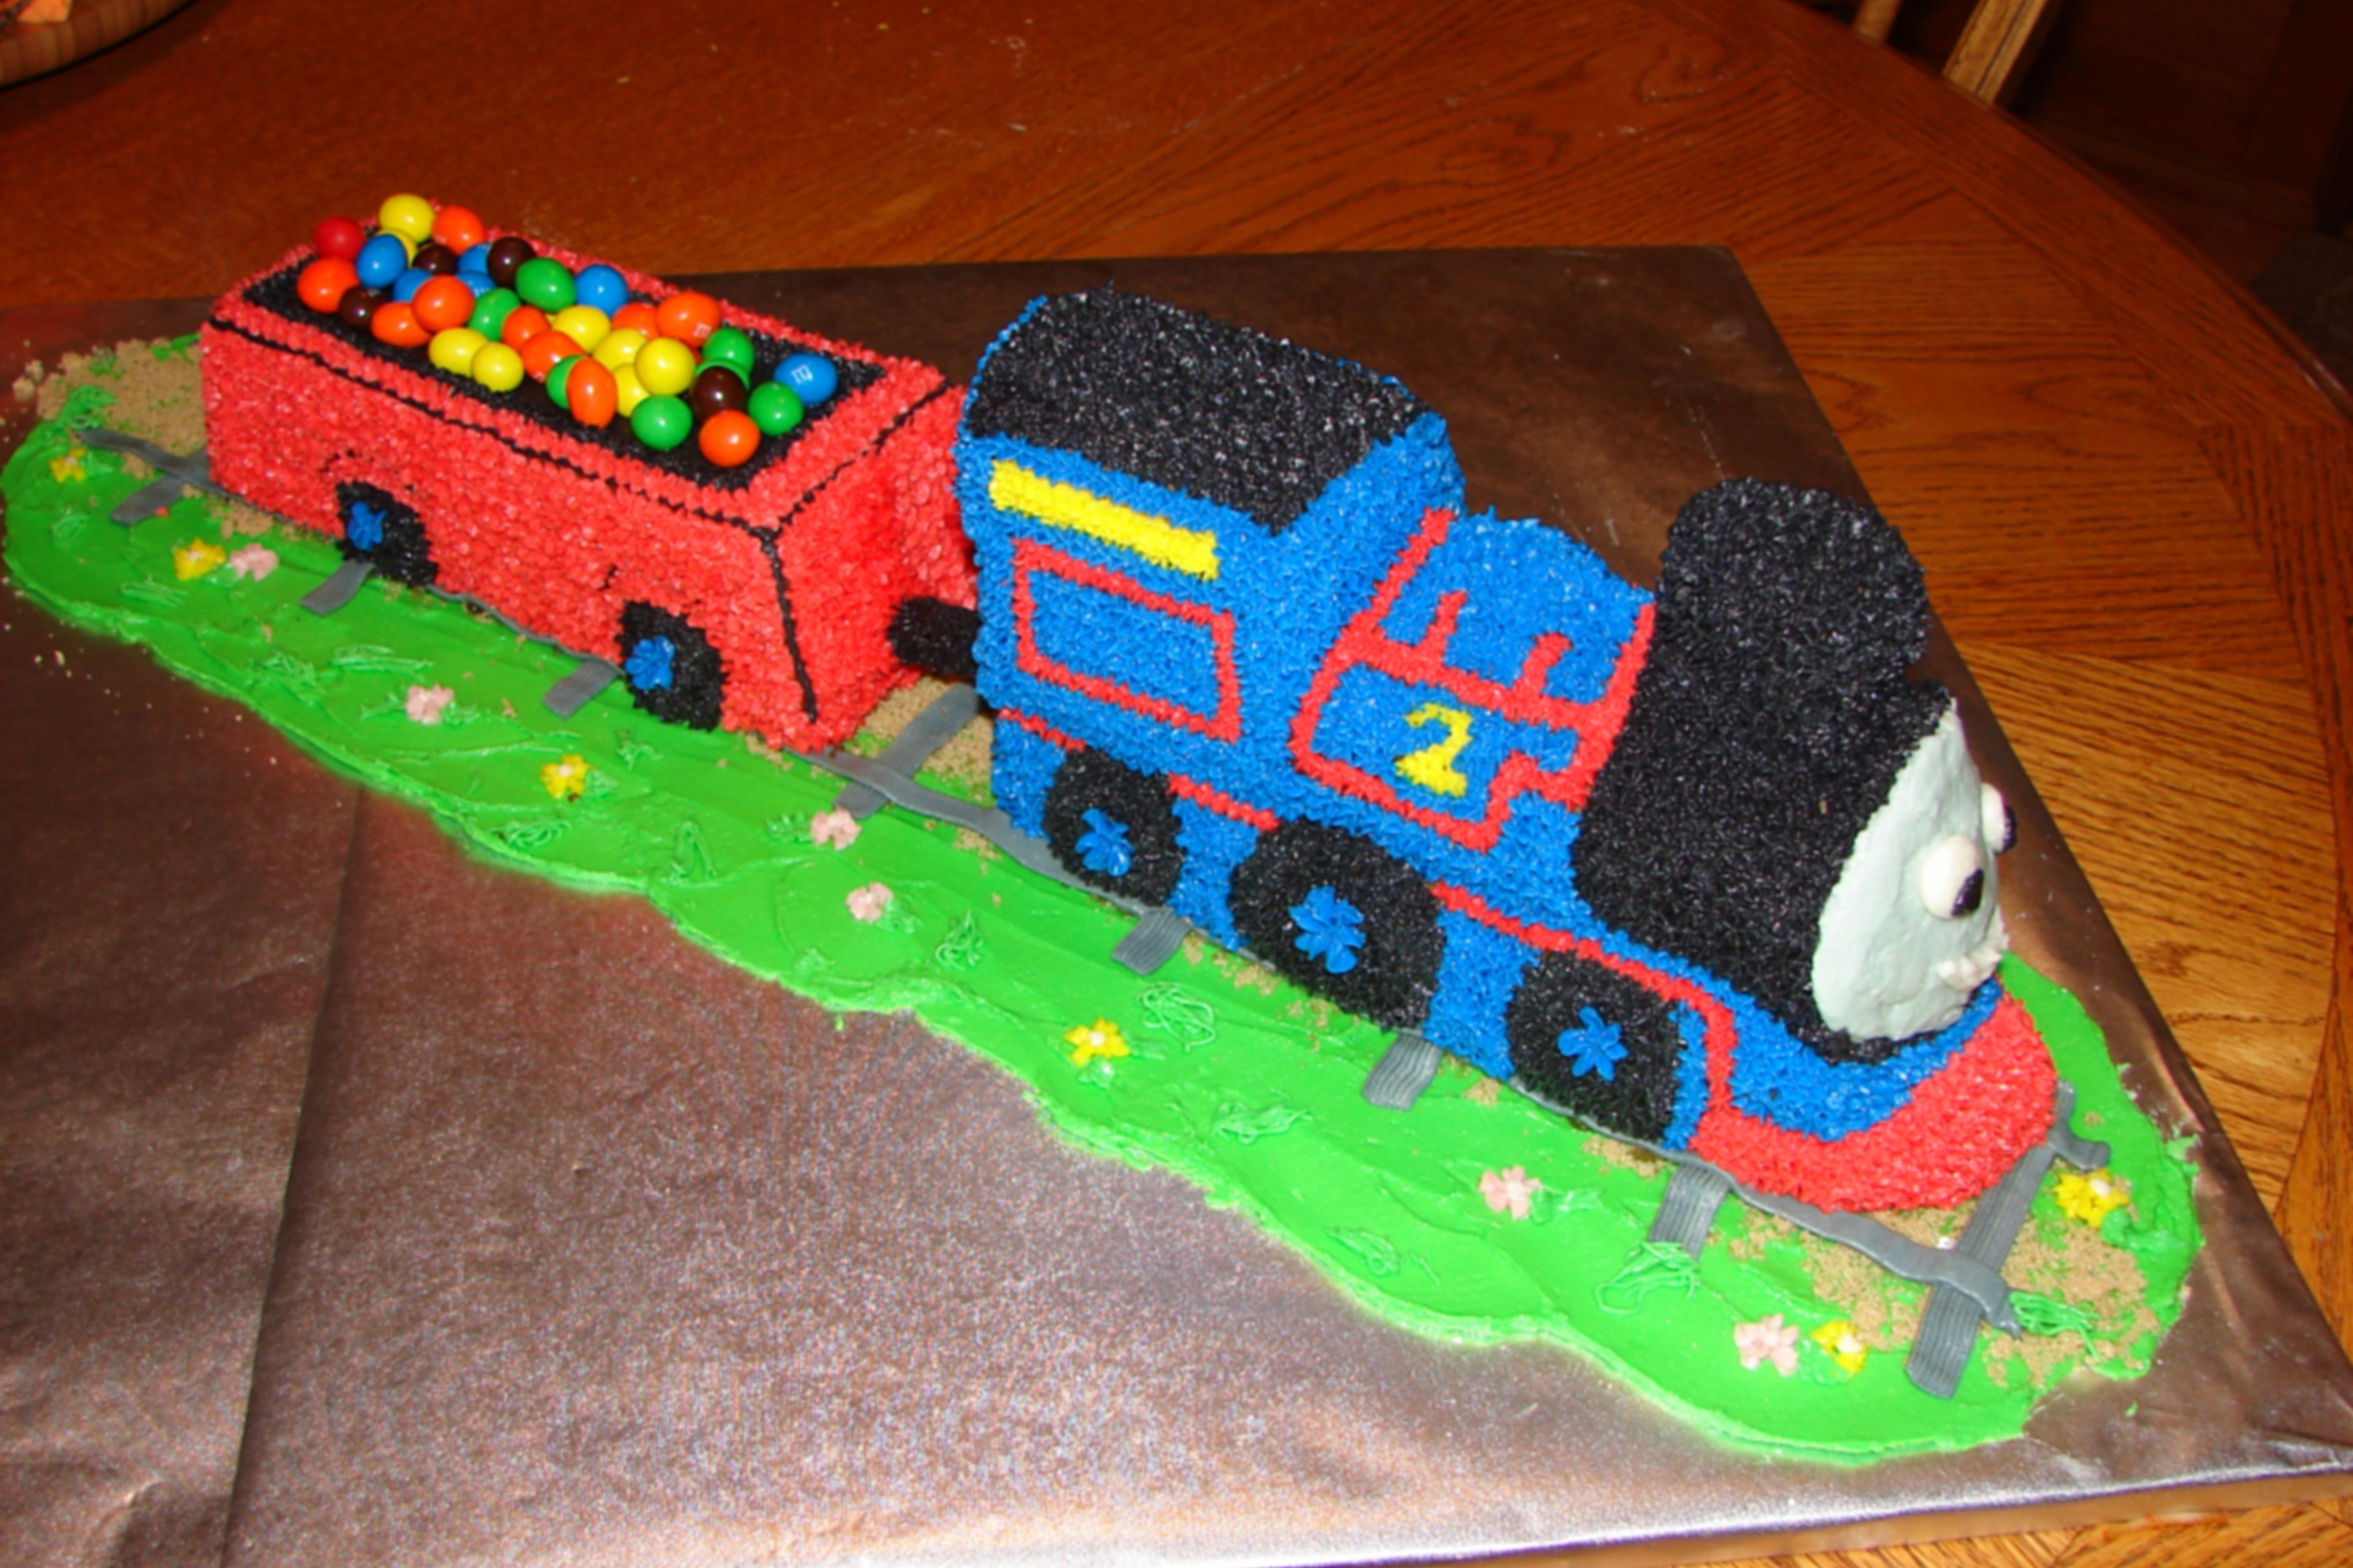 Thomas The Train Cake Pan